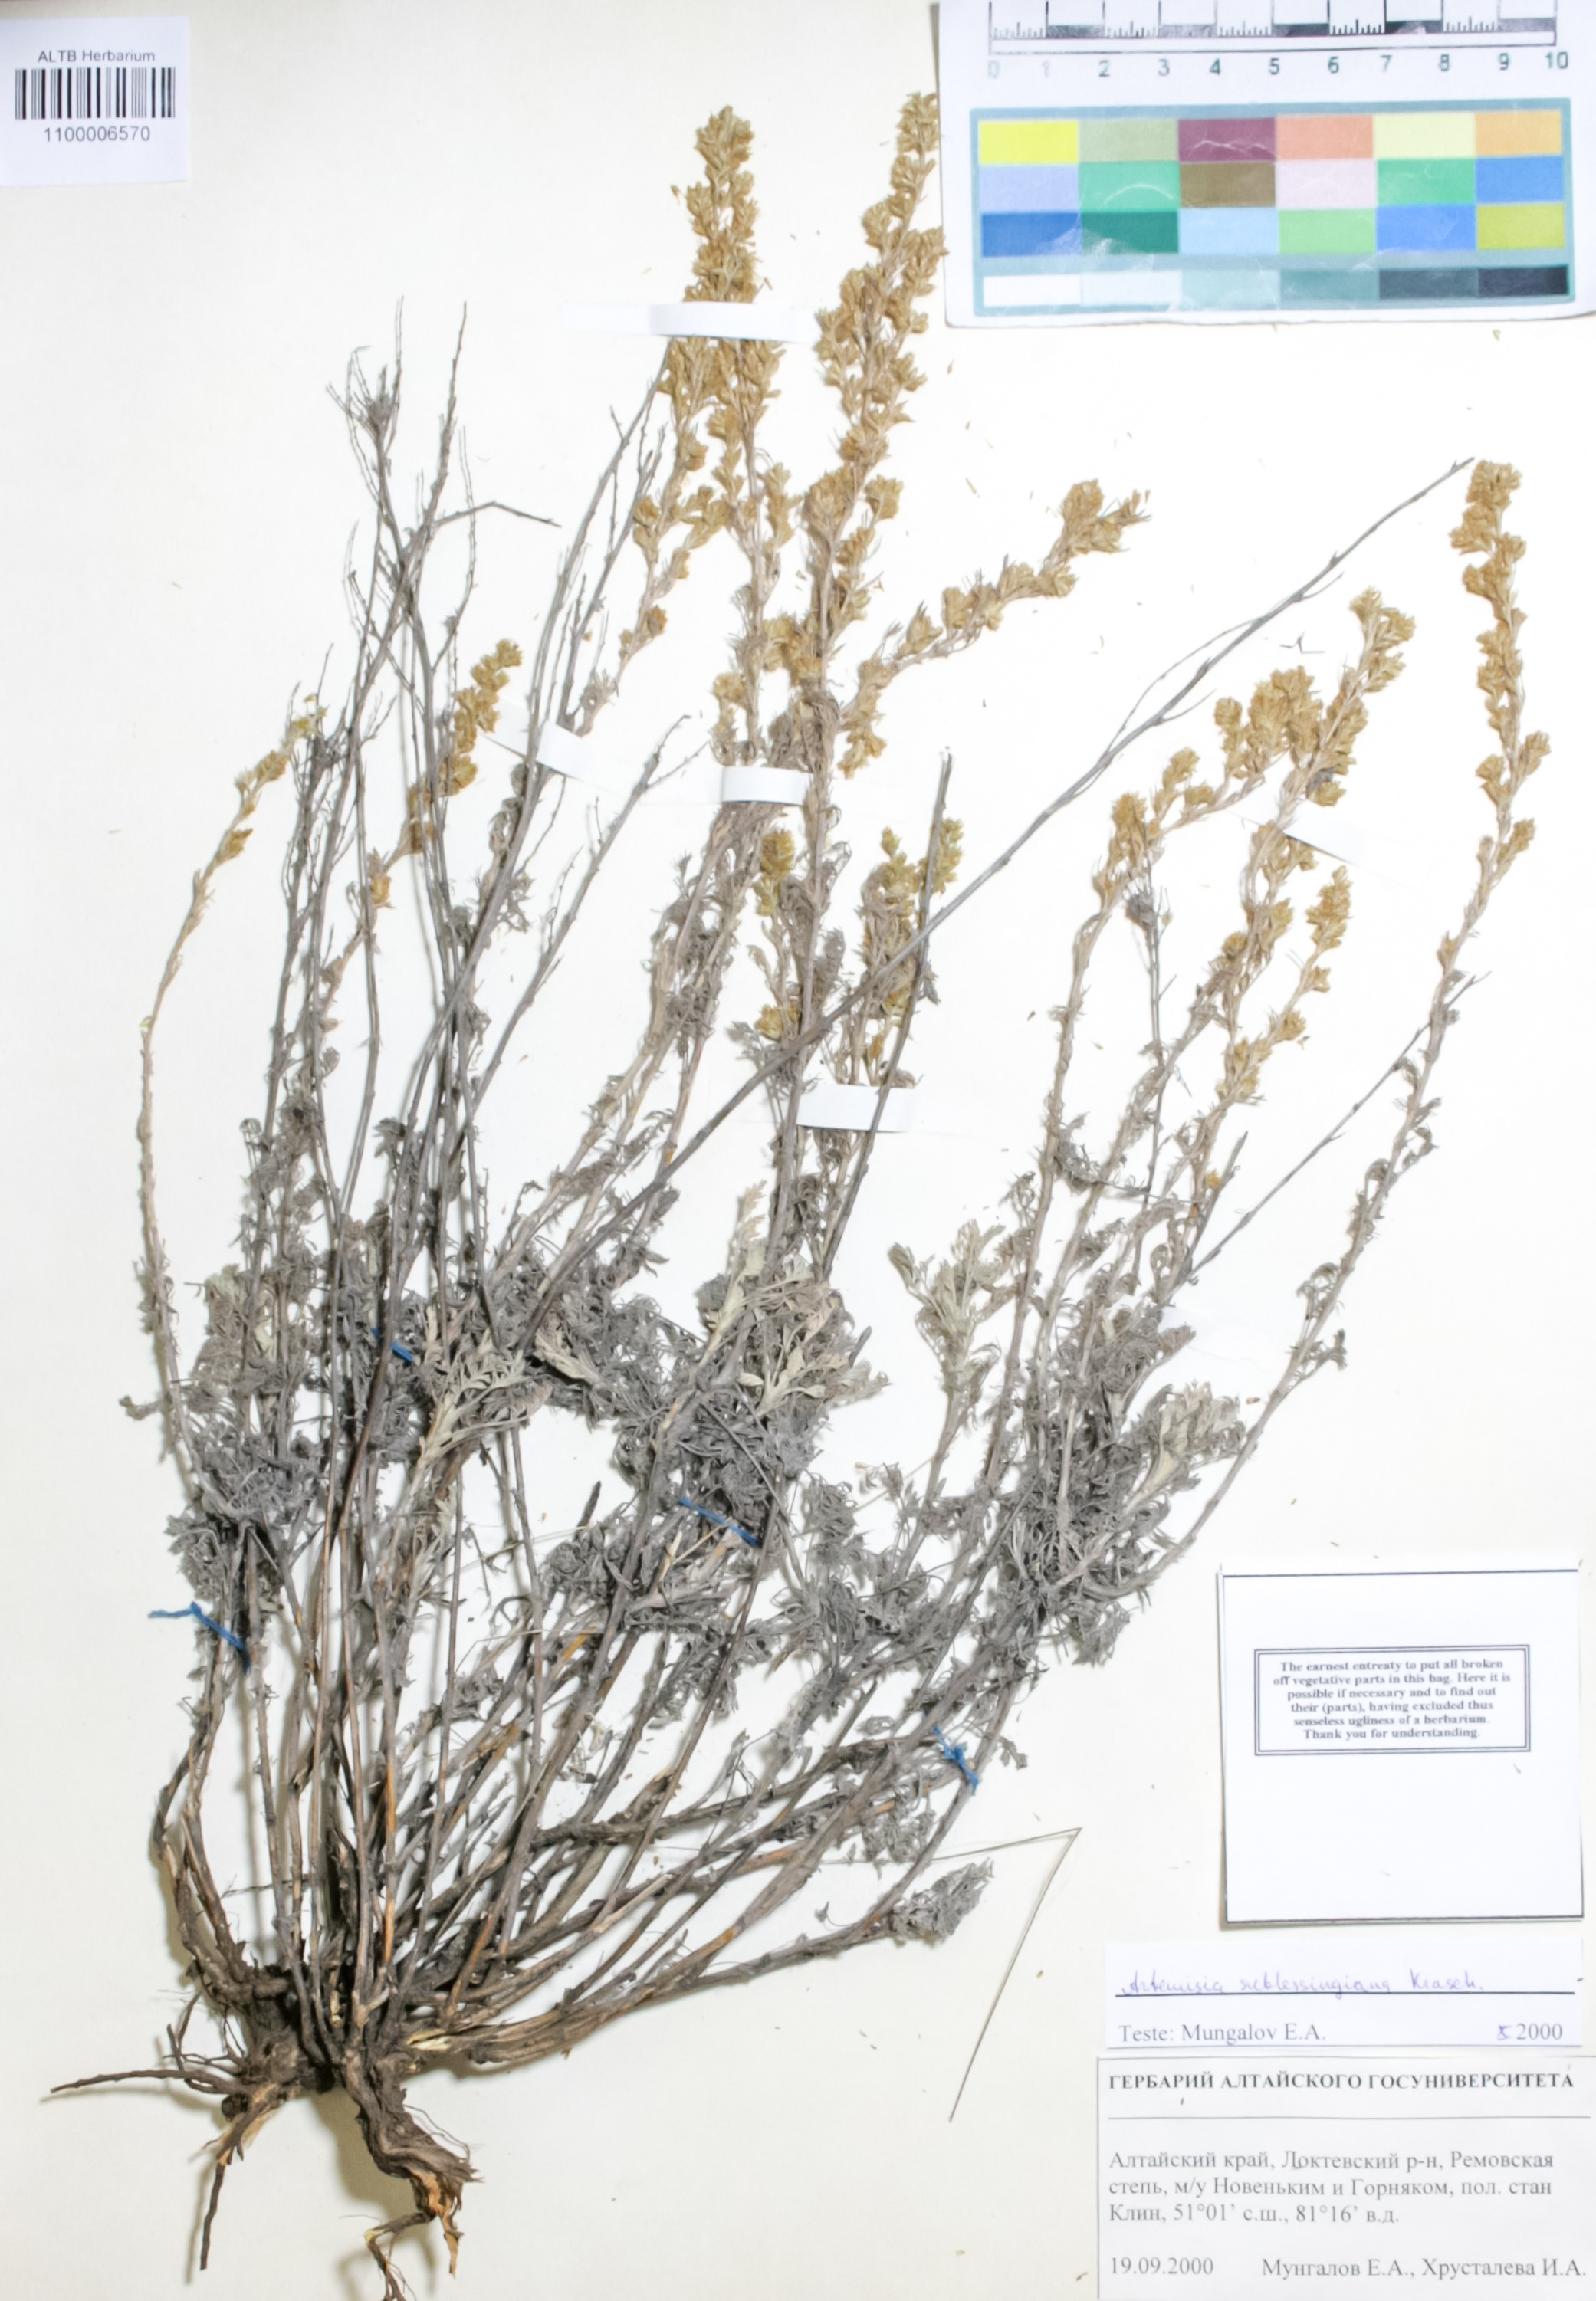 Asteraceae,Artemisia sublessingiana Krasch. ex Poljakov